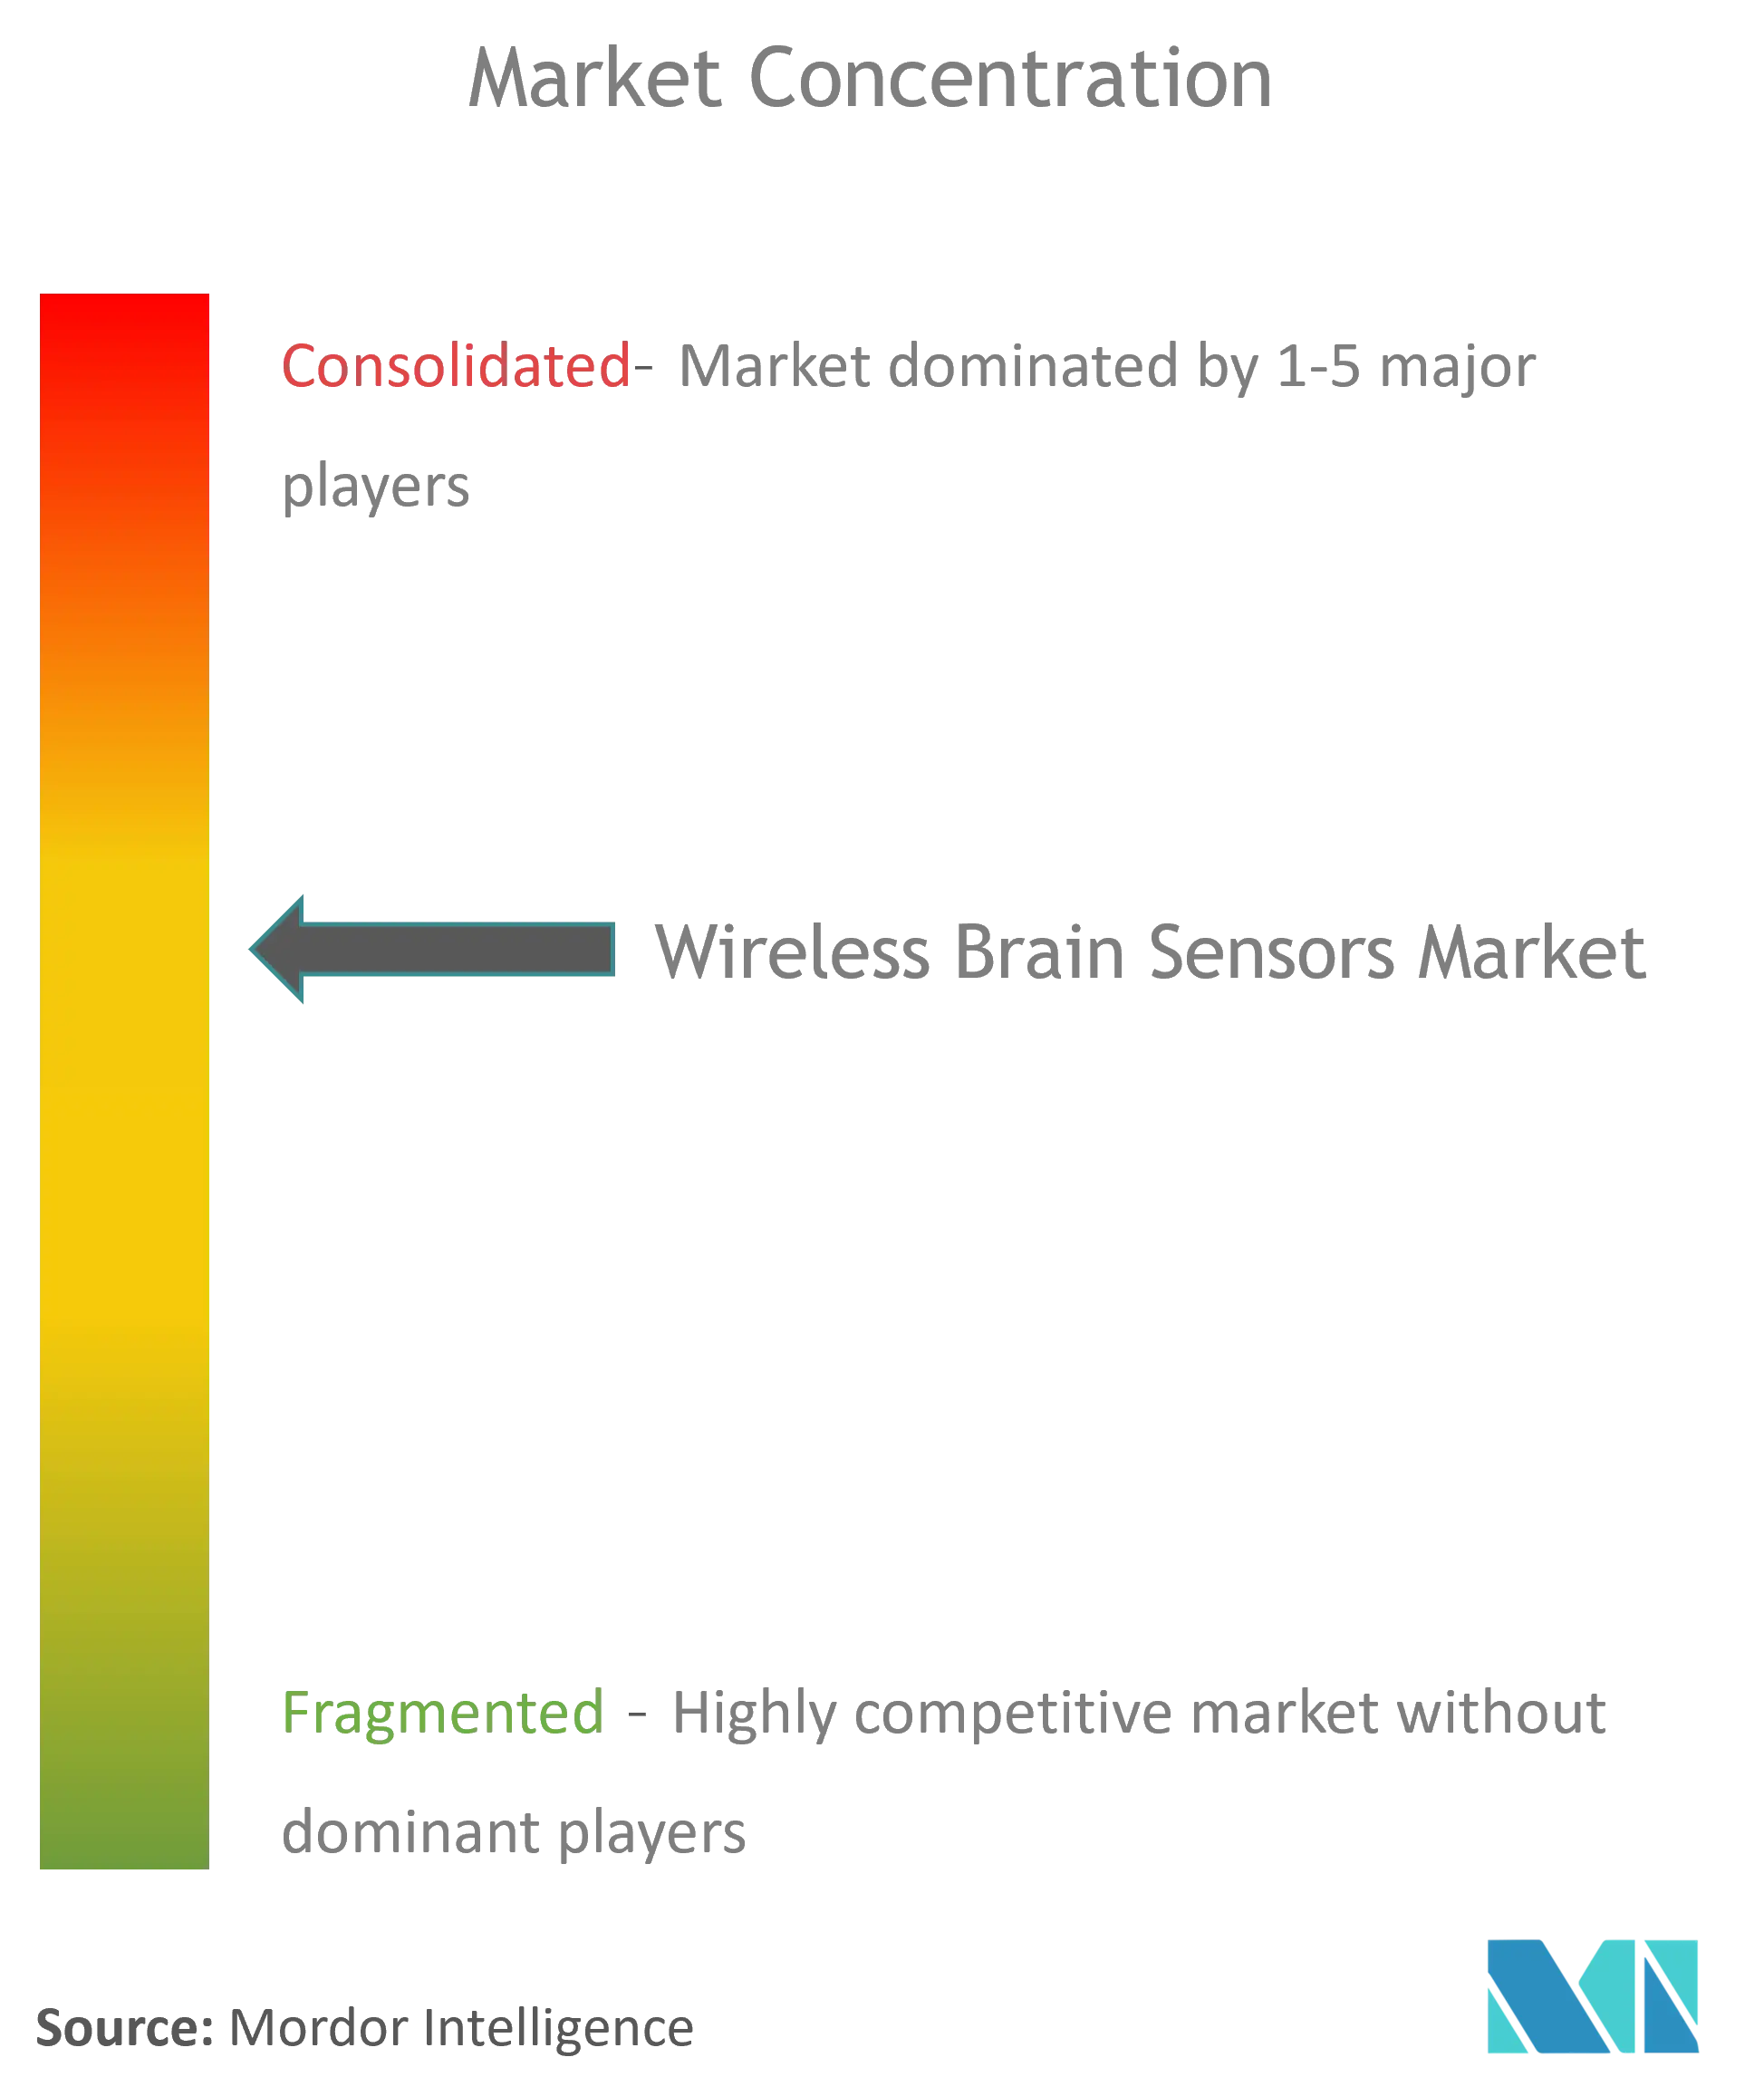 Wireless Brain Sensors Market  Concentration